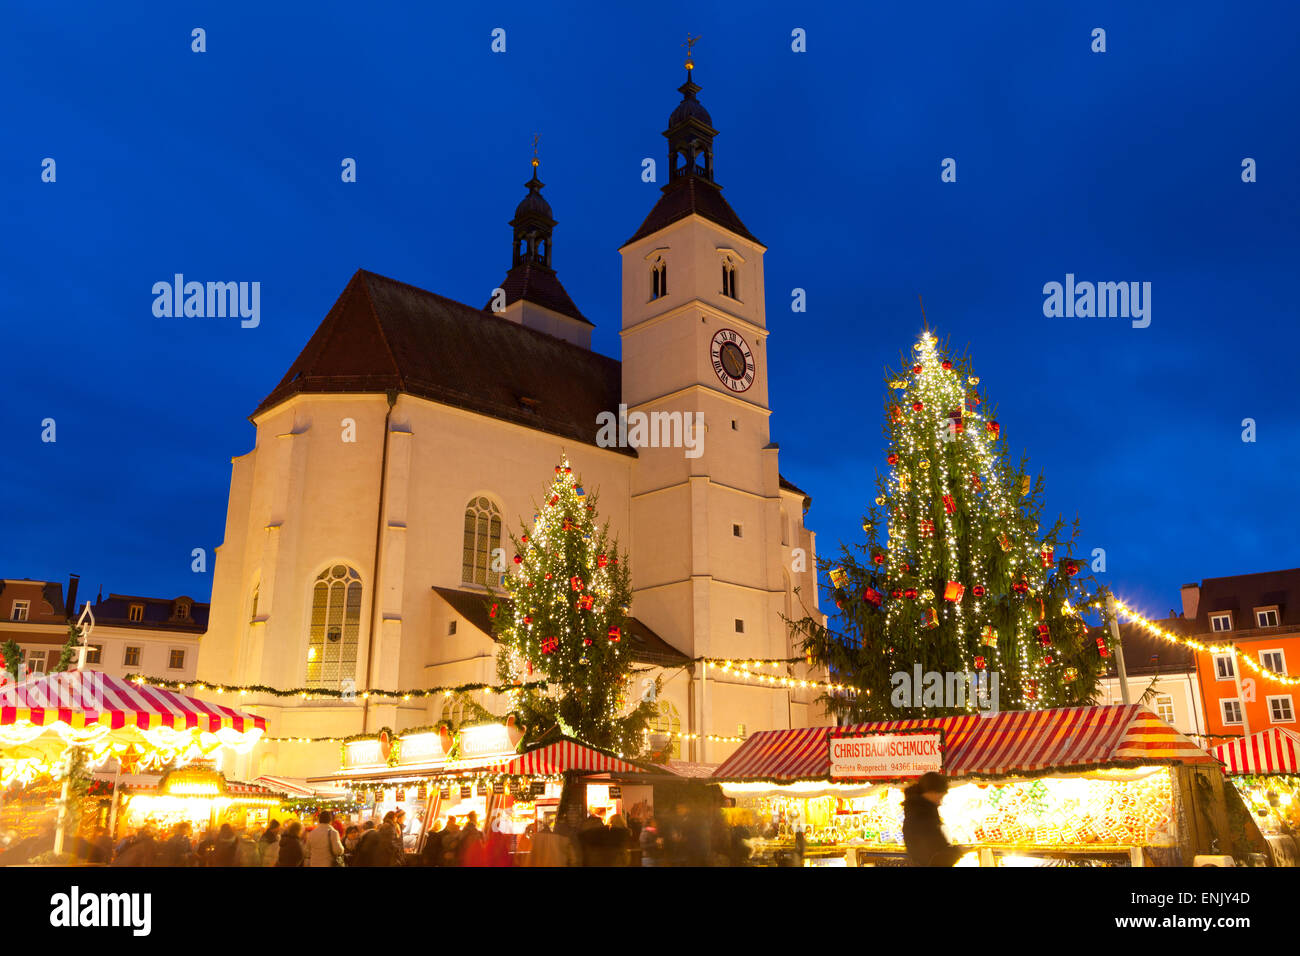 Christmas Market in Neupfarrplatz, Regensburg, Bavaria, Germany, Europe Stock Photo